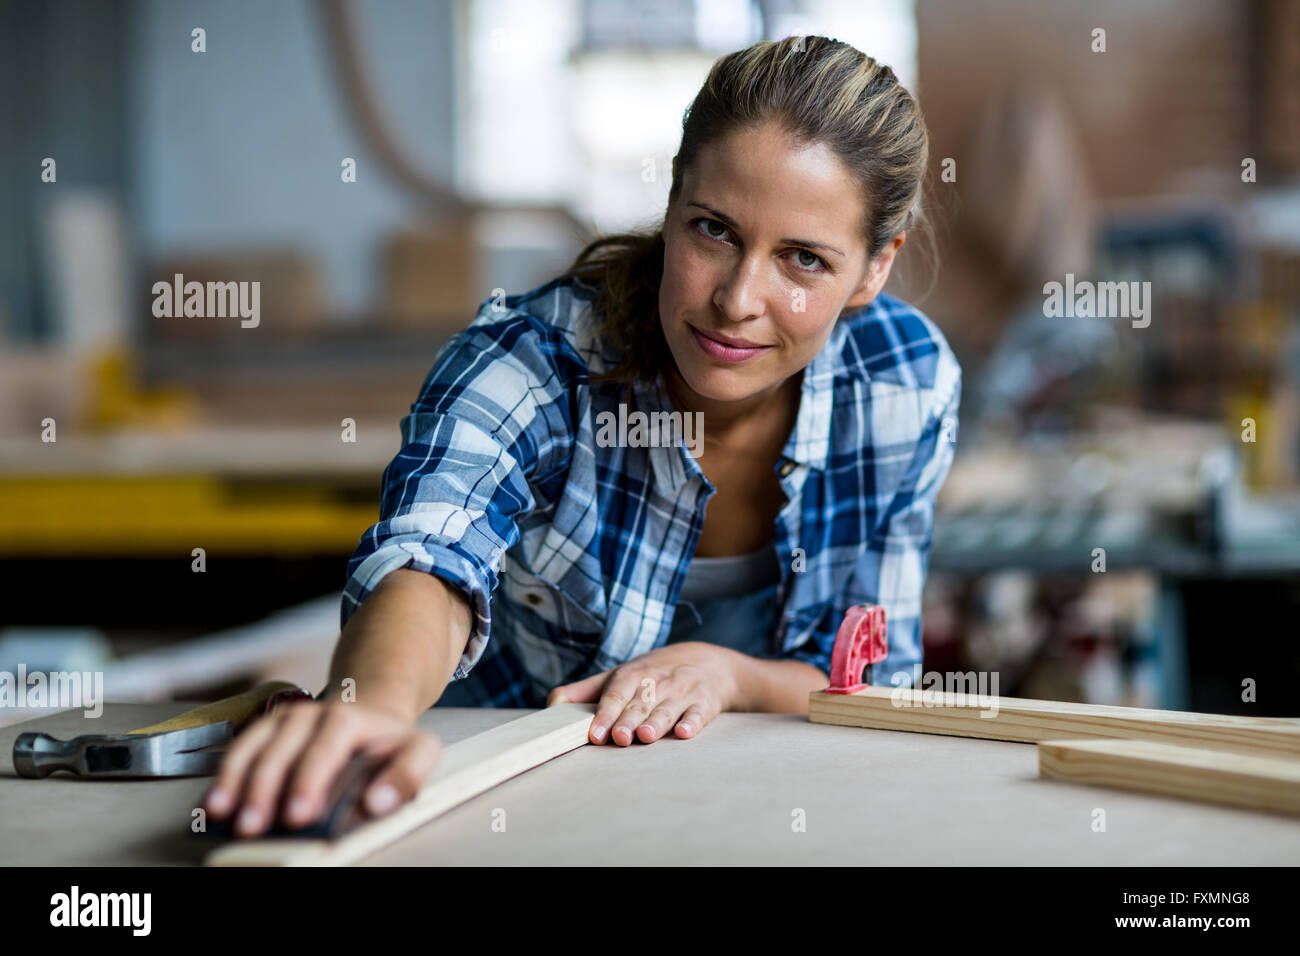 Female carpenter rubbing wooden plank with sanding block Stock Photo